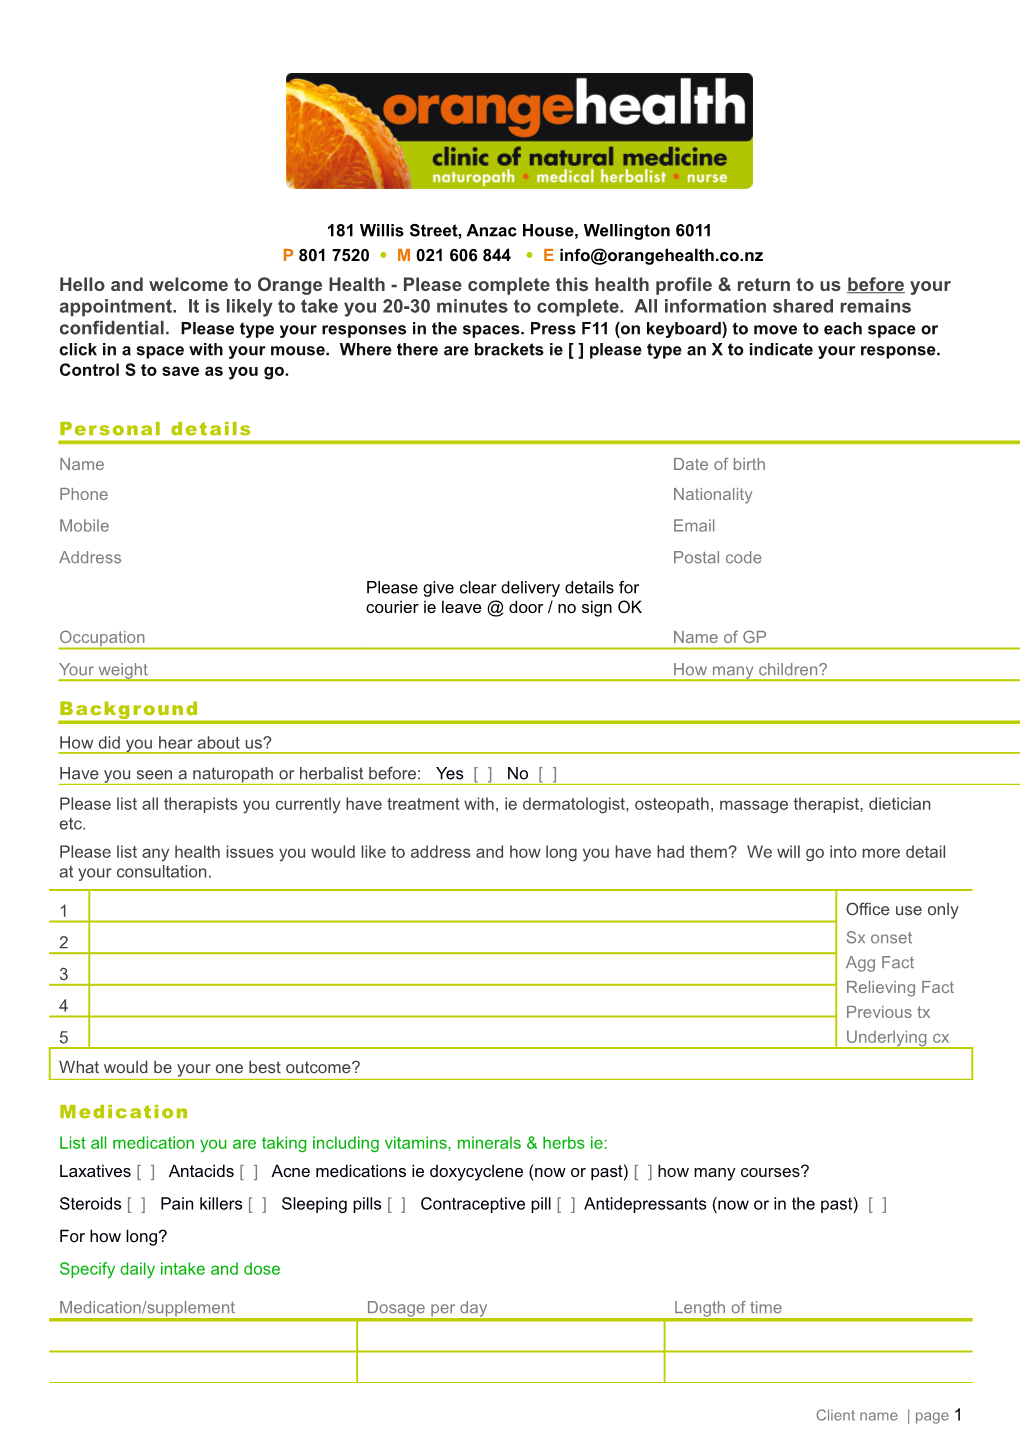 Target Audience Profiling Questionnaire